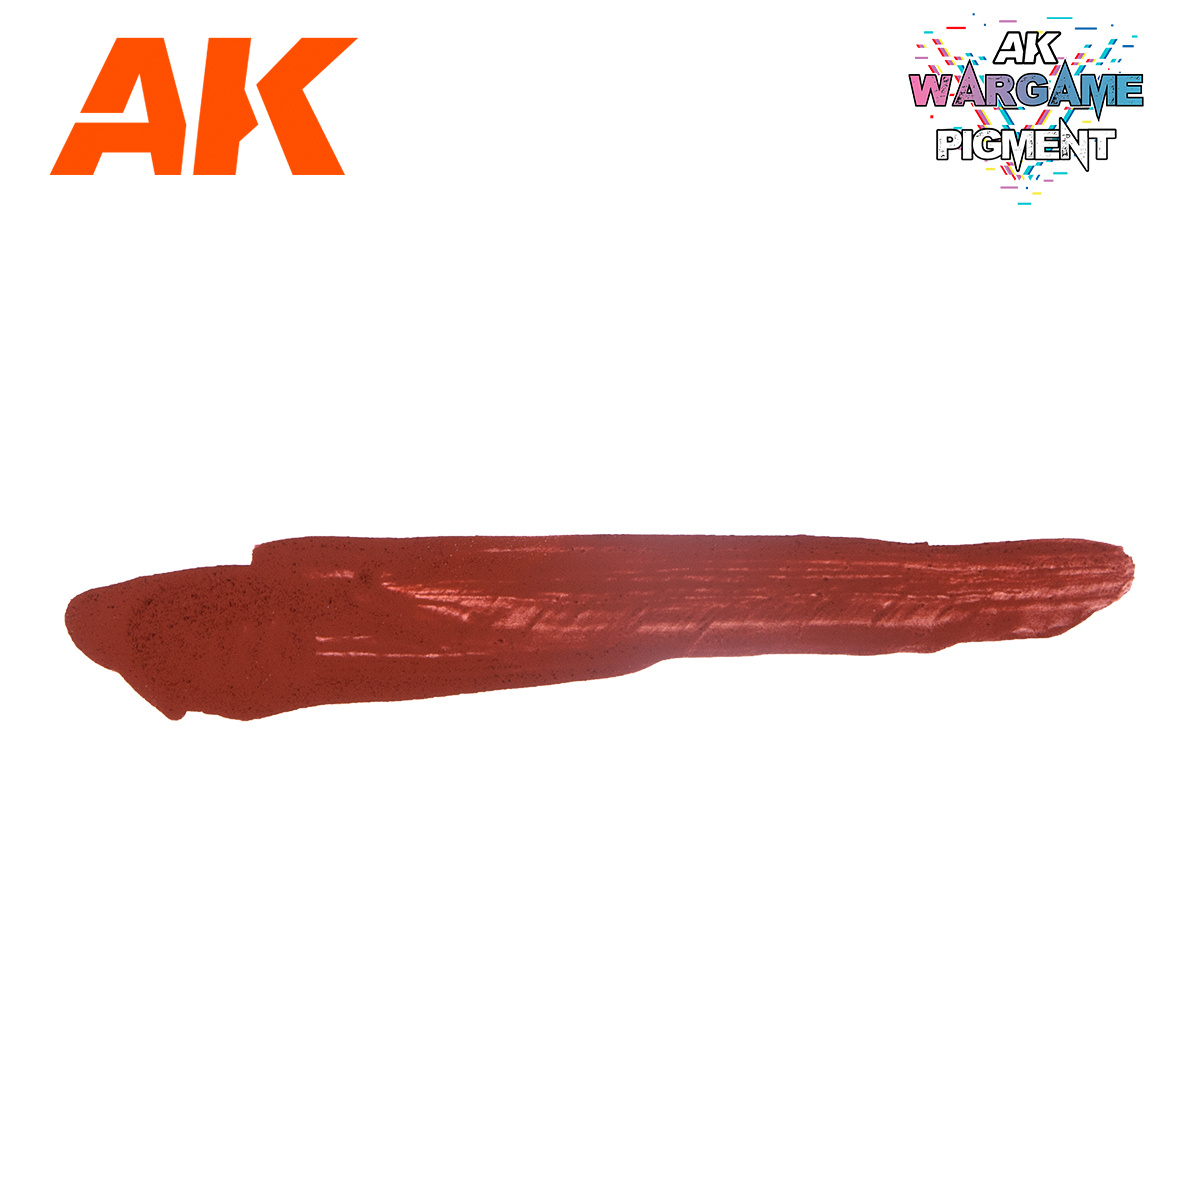 AK-Interactive Dark Rust Dust - 35ml - AK-Interactive - AK-1208